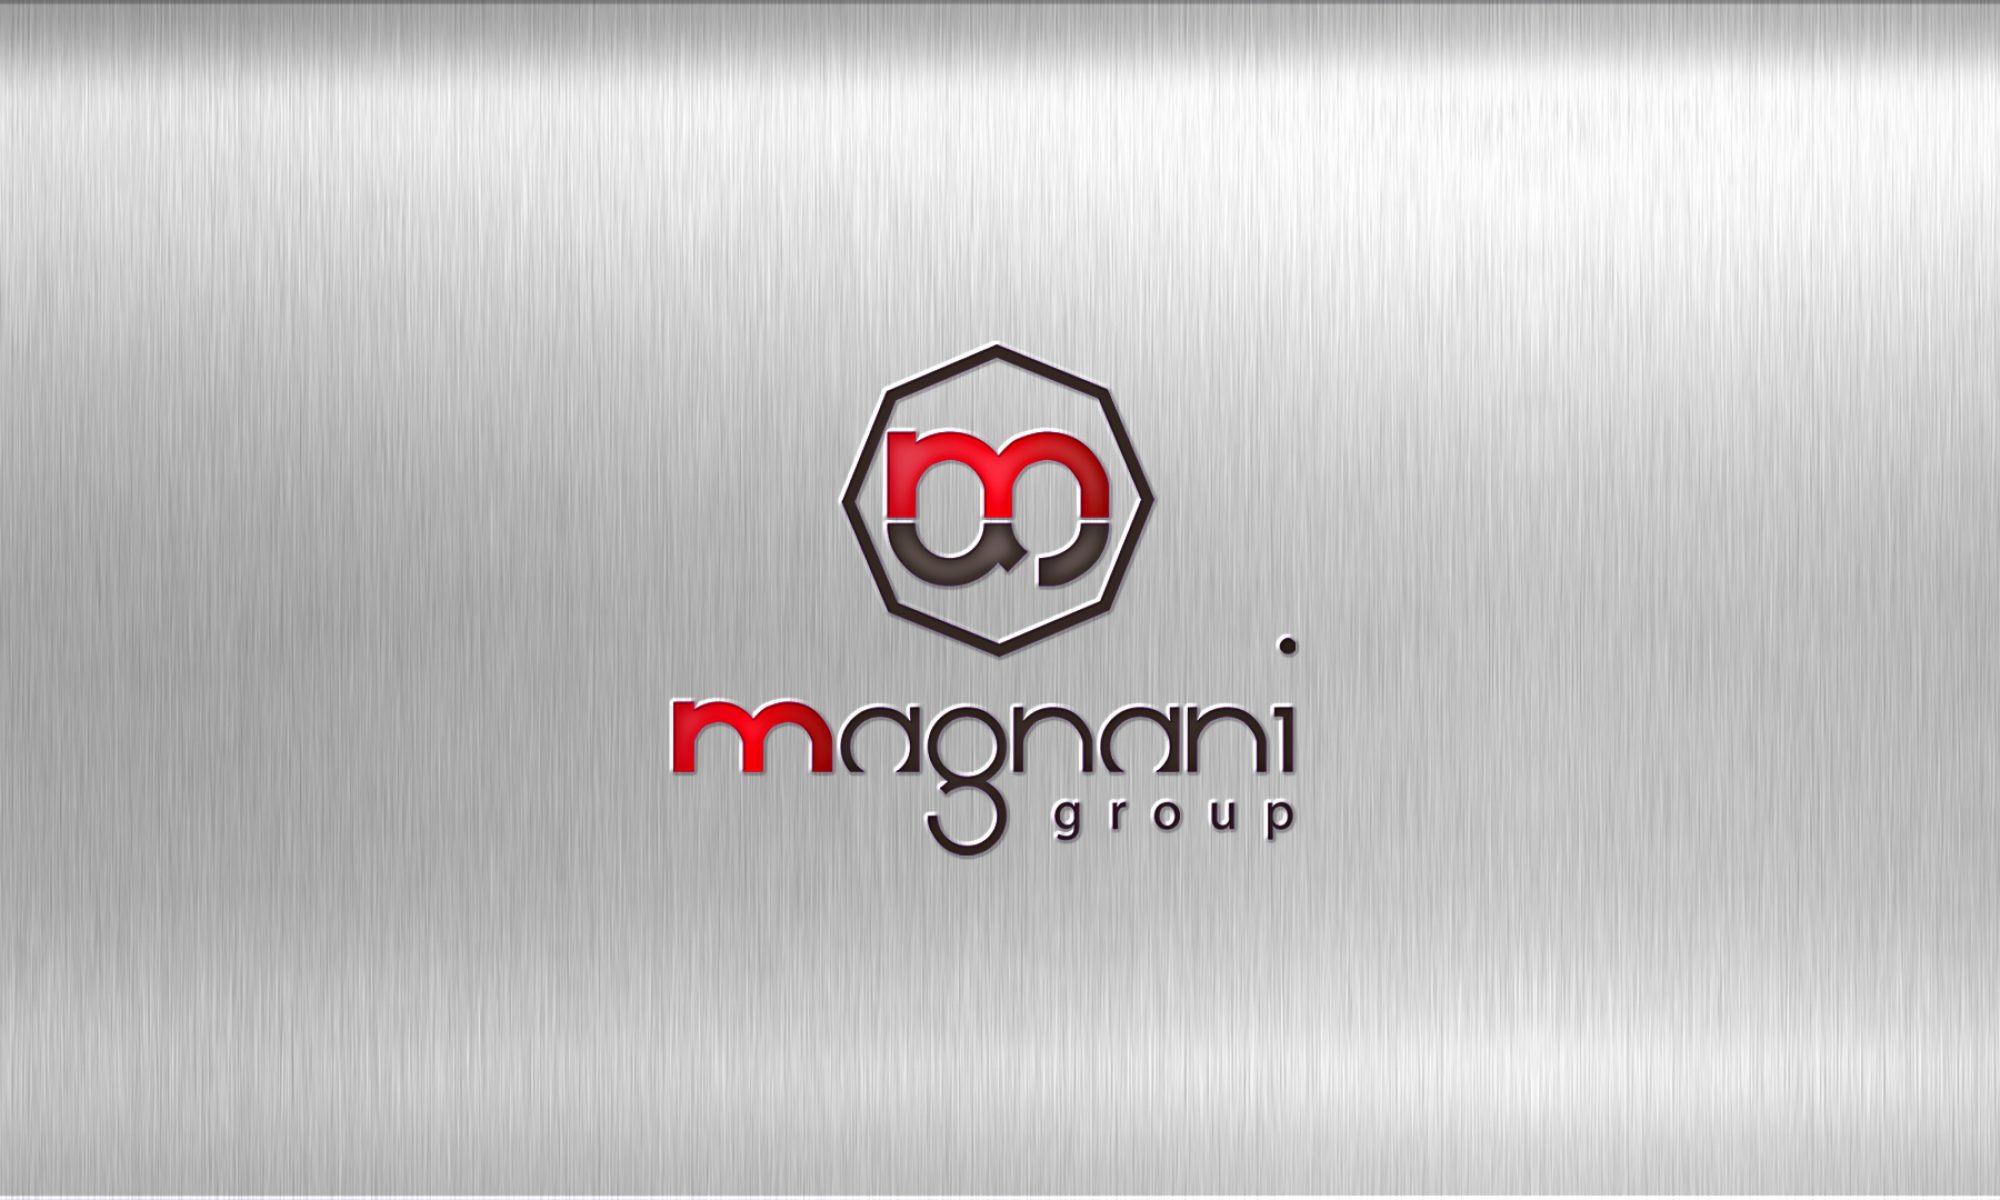 Magnani Group